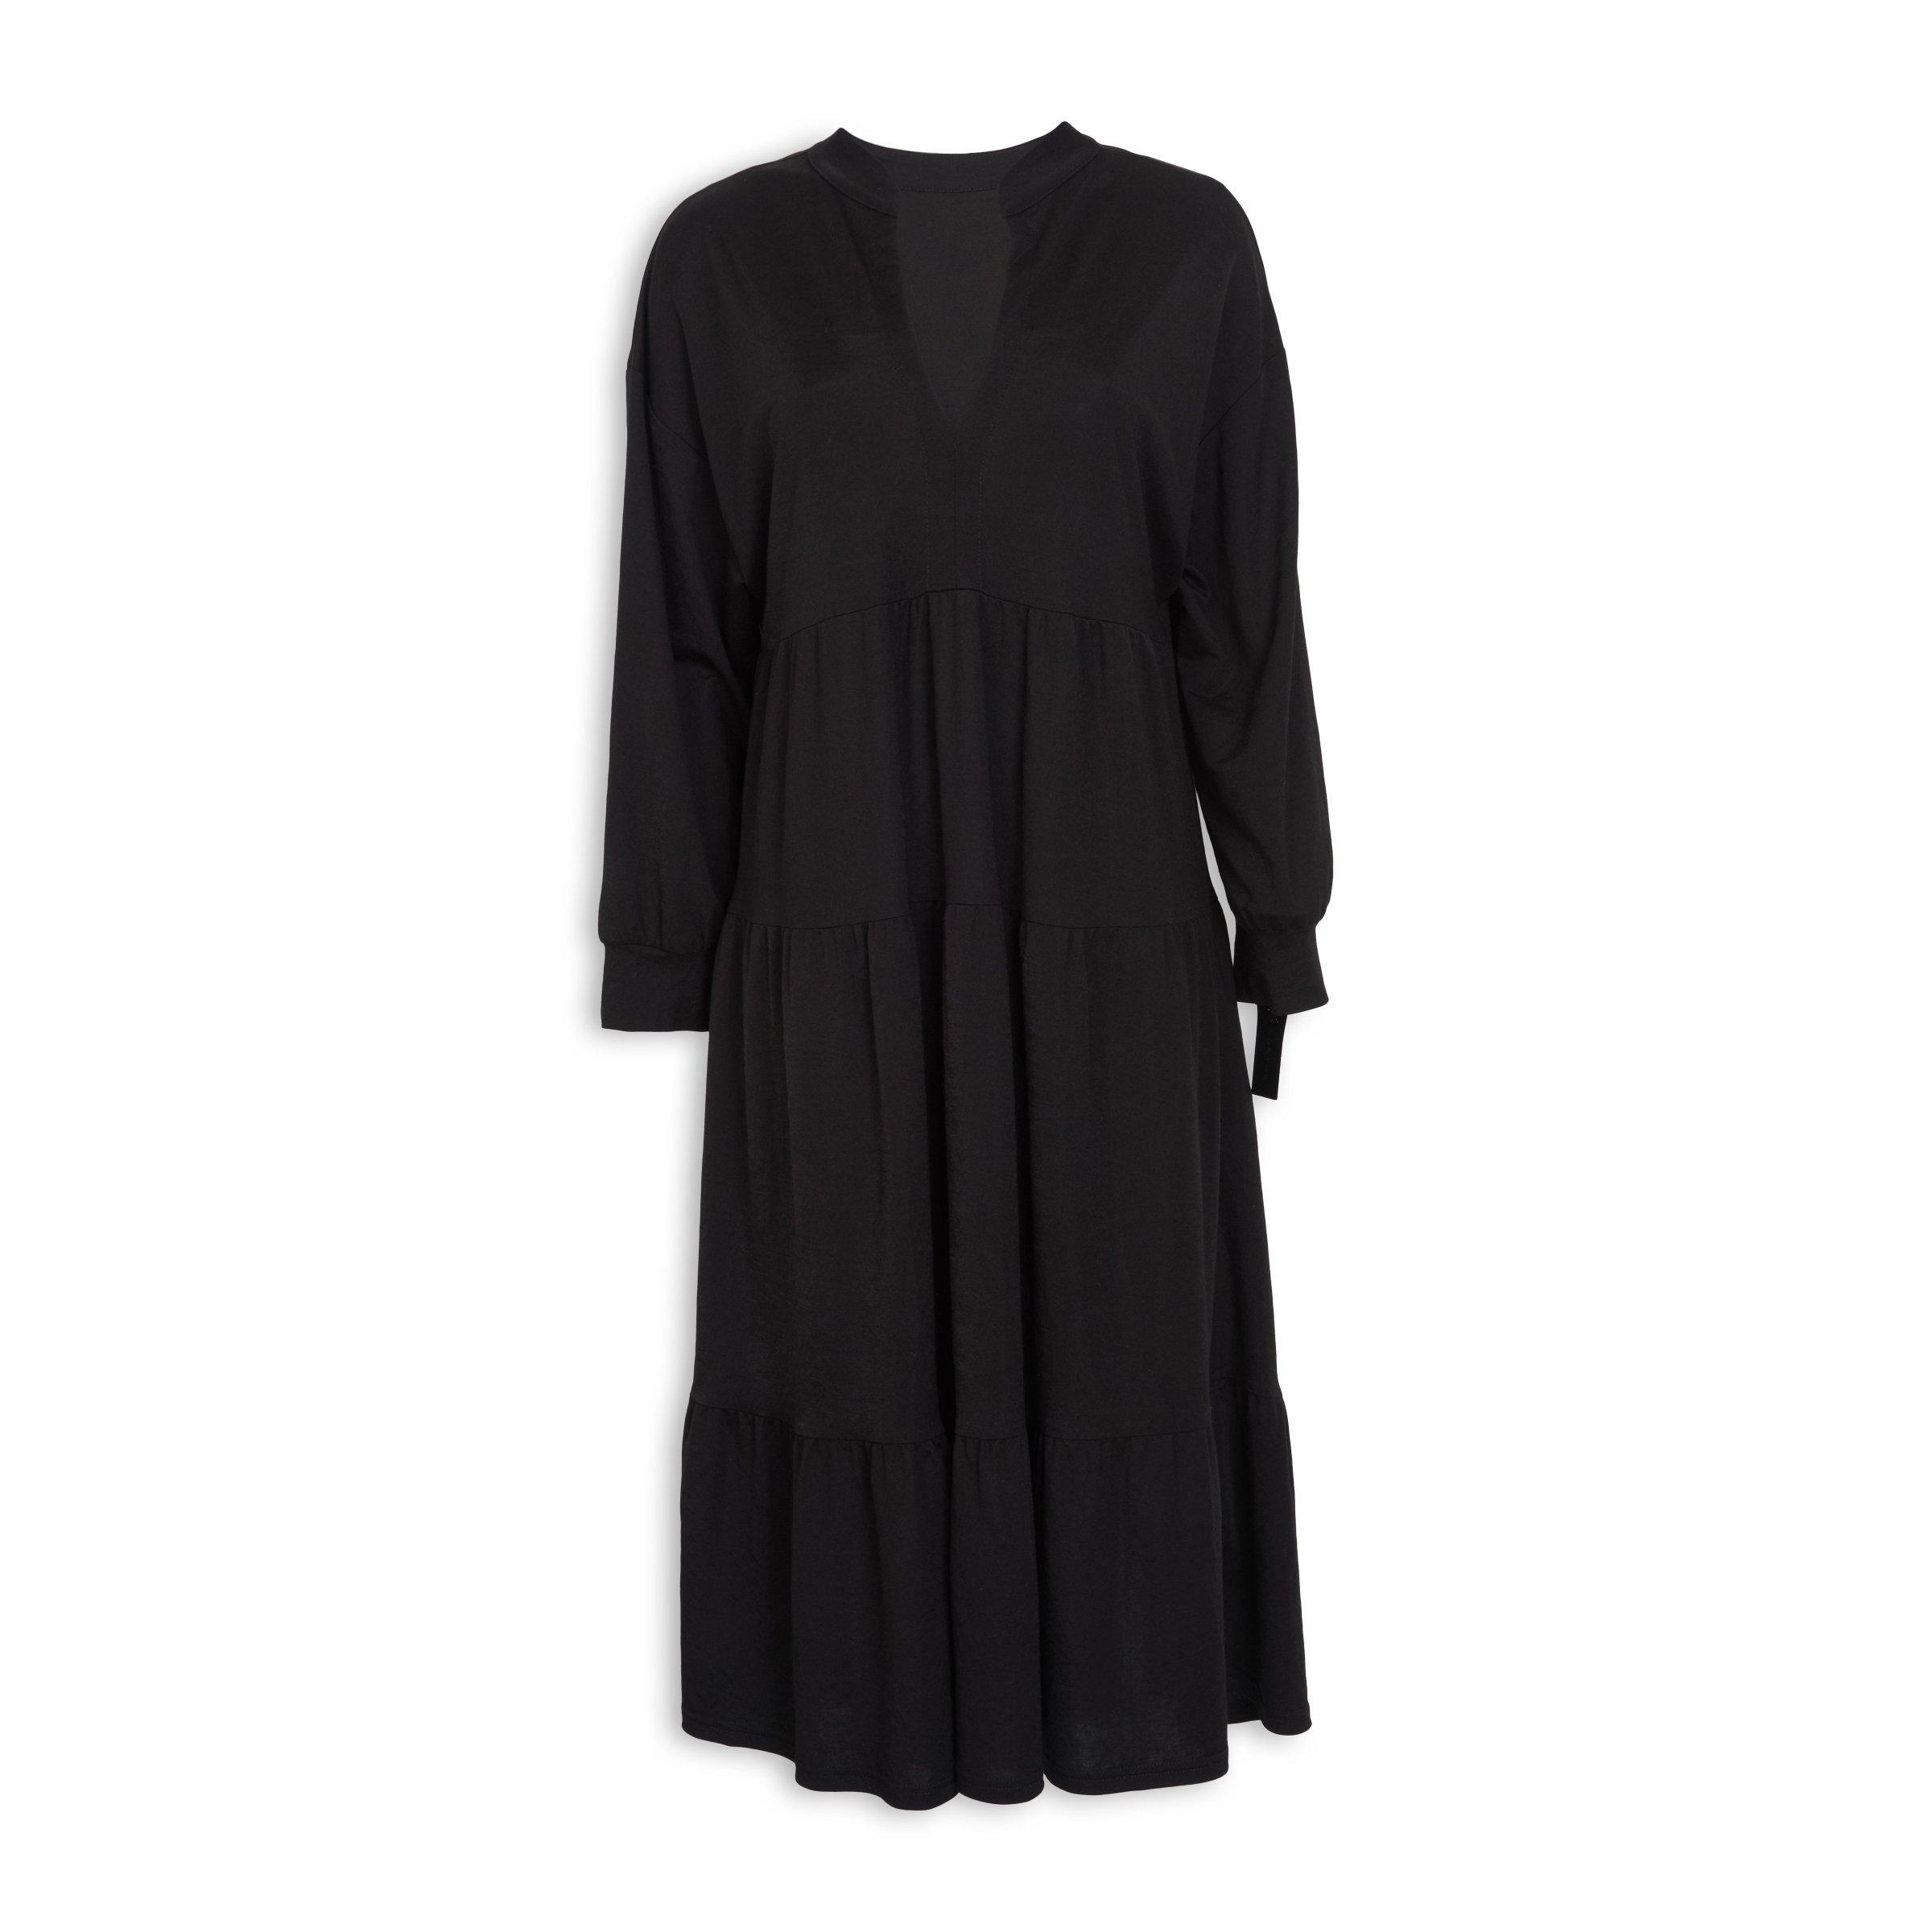 Buy Basix Black Knit Dress Online | Truworths